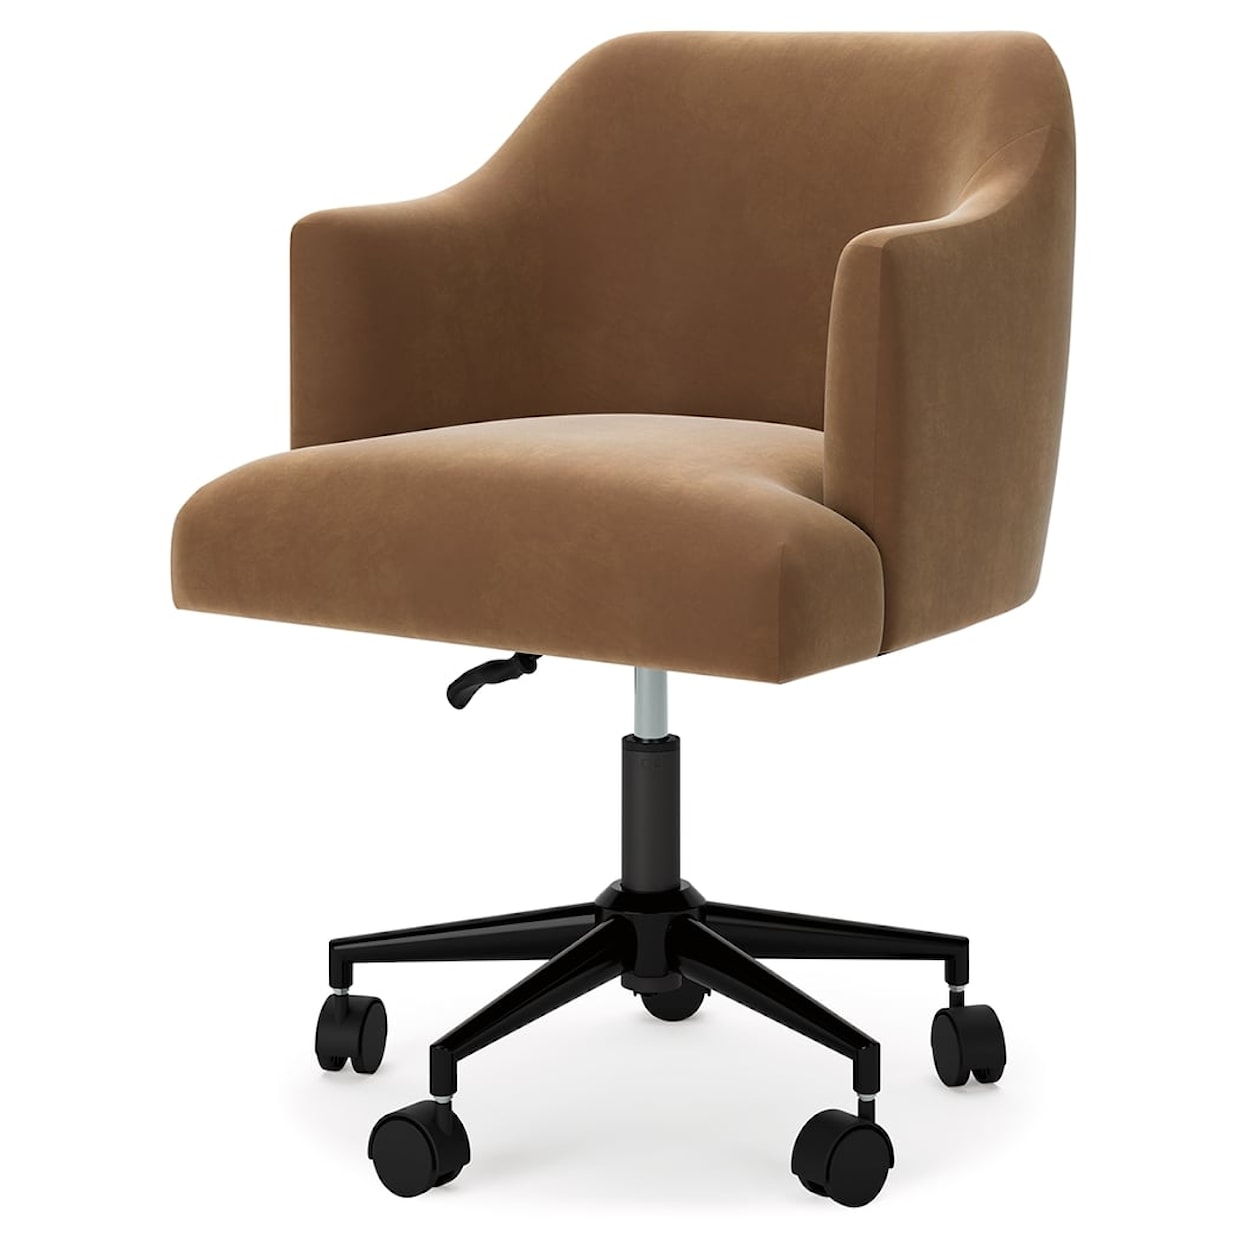 Benchcraft Austanny Home Office Desk Chair